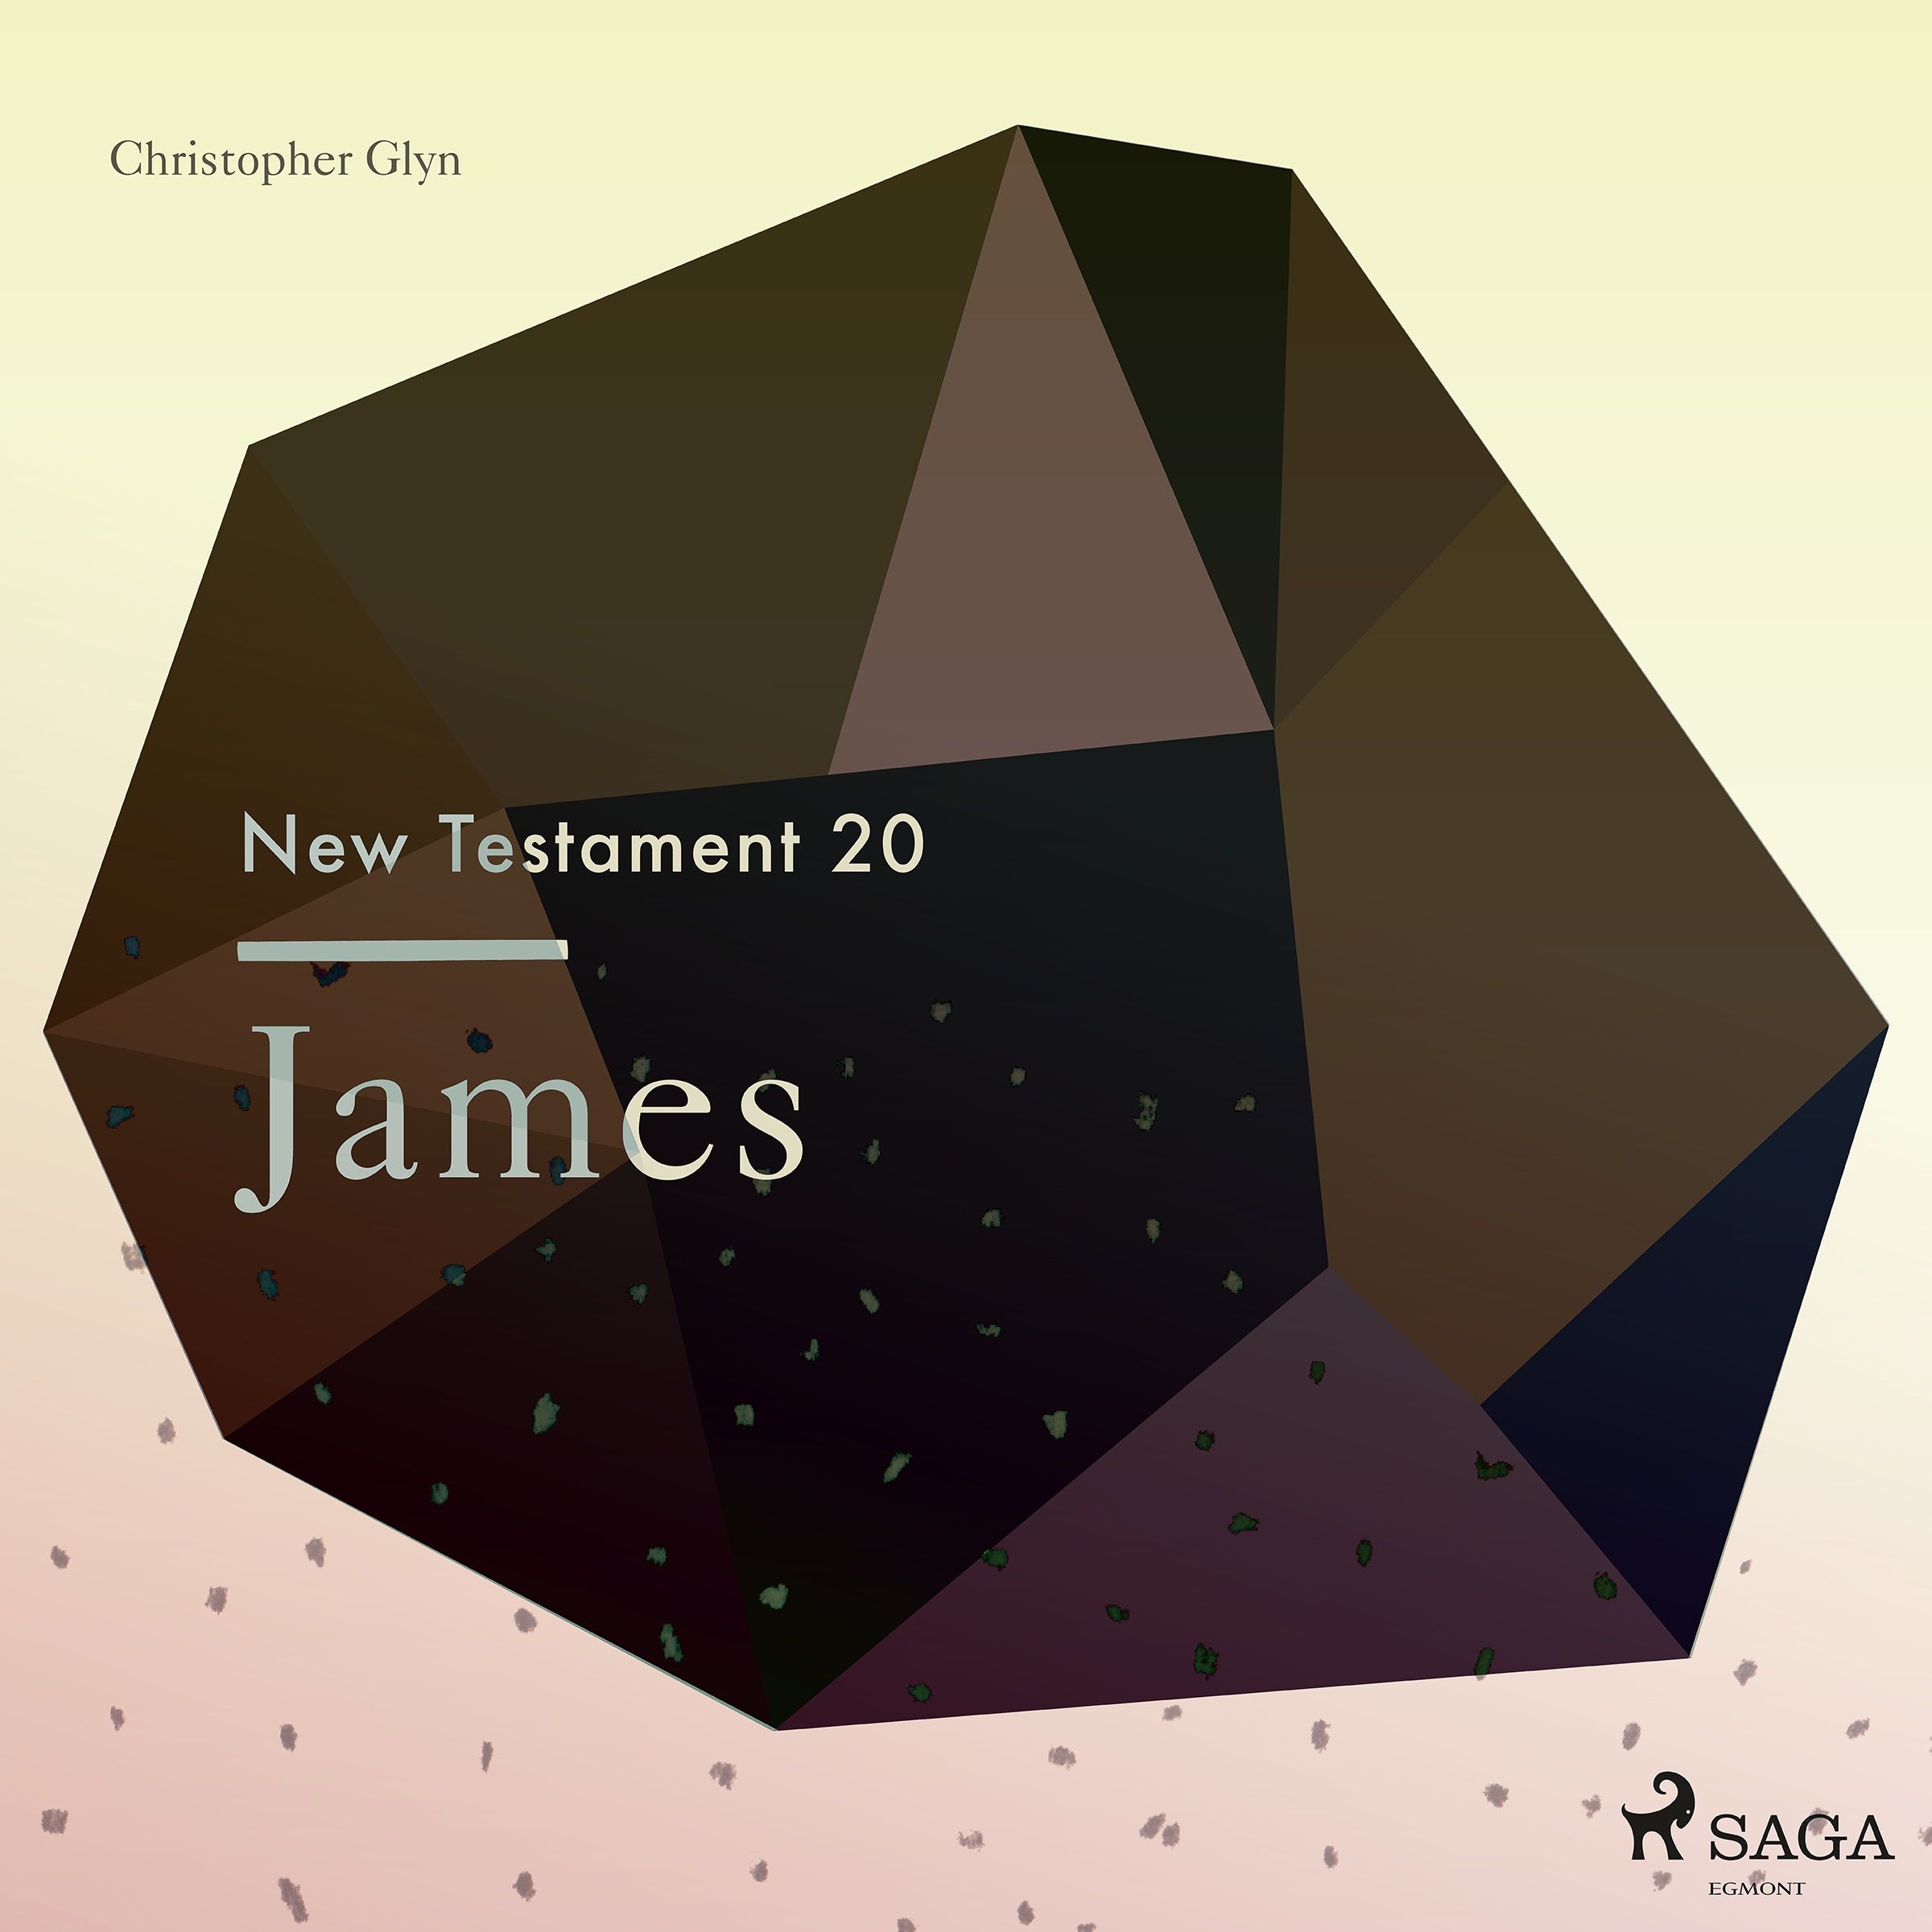 The New Testament 20 - James, ljudbok av Christopher Glyn